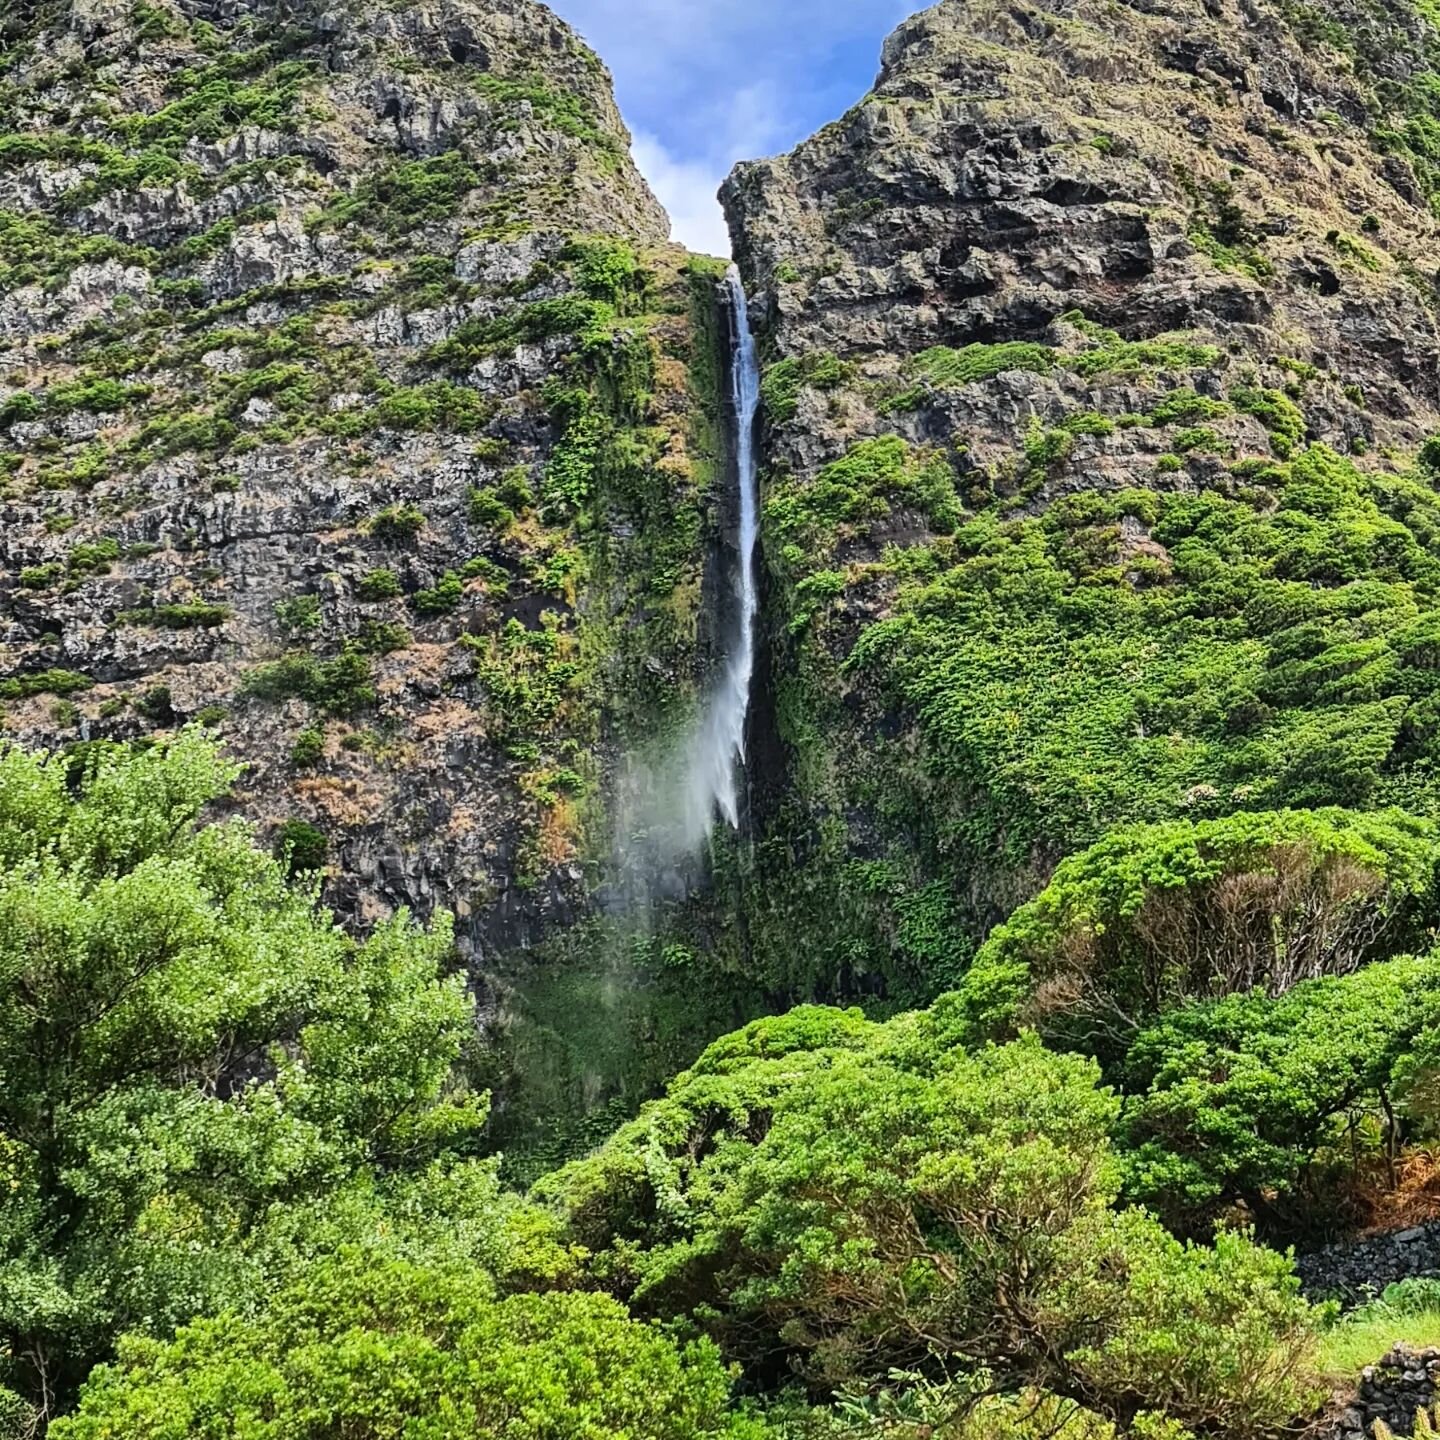 Flores Island - The land of waterfalls! ❤

#flores #island #travel #waterfalls #stunning #landscapelovers #greenlove #natureswonder #wildnature #naturephotos #azoresconnections #bespoketailoring #trips